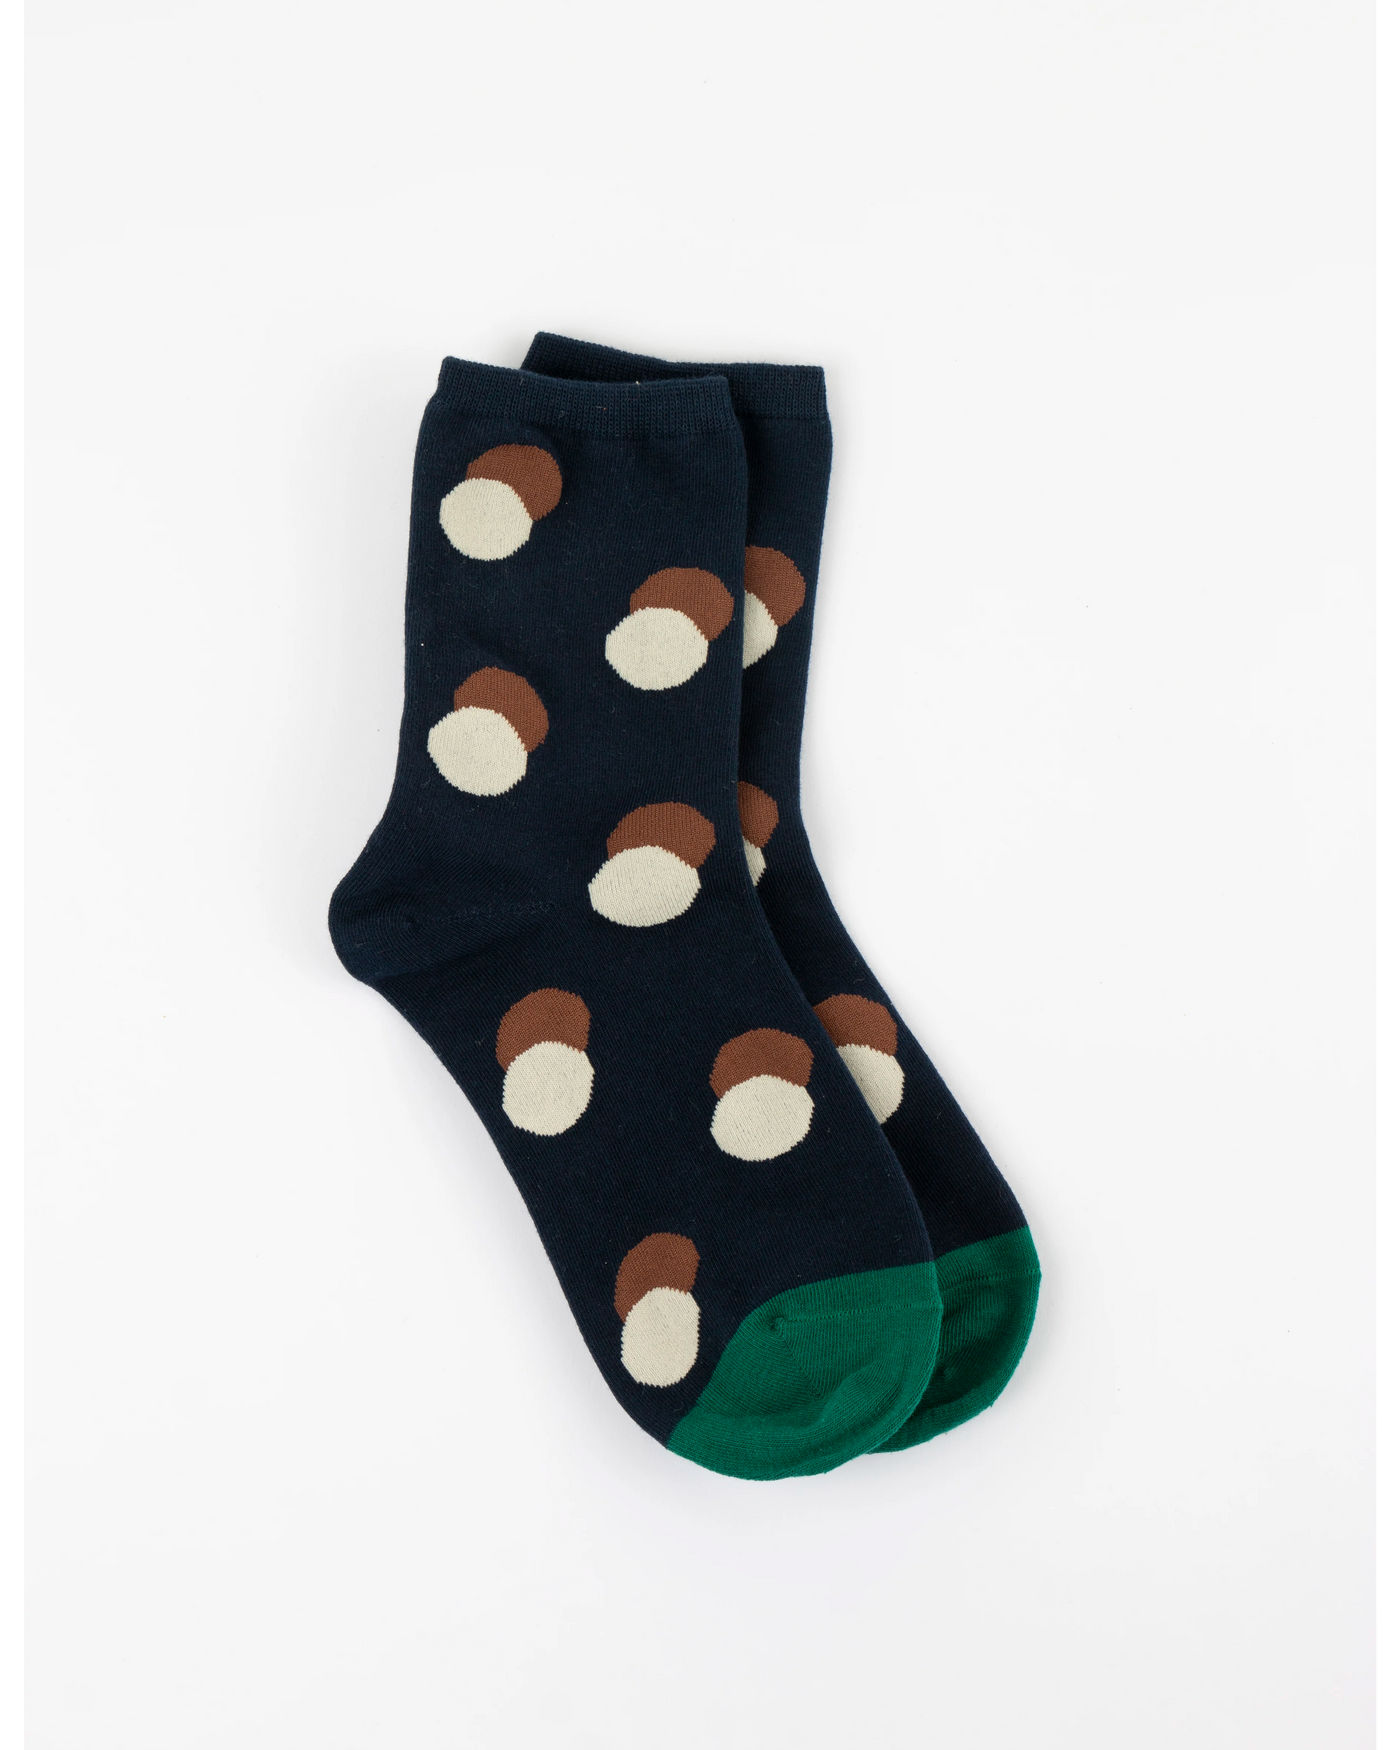 Stella & Gemma Socks Navy With Cream & Brown Dots